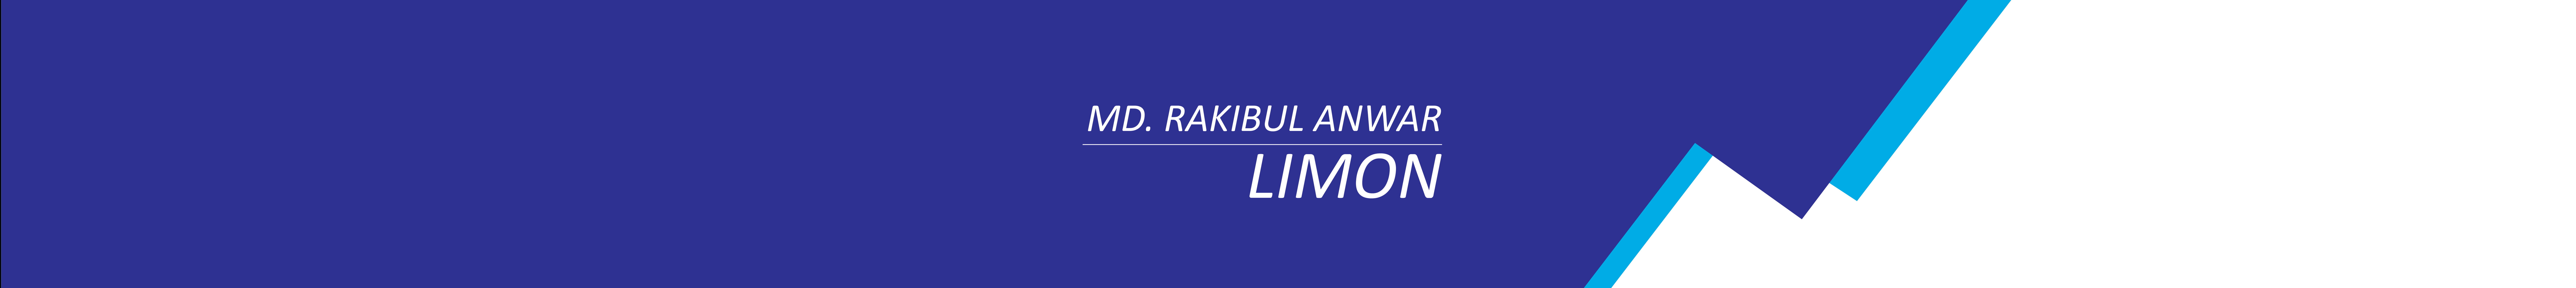 Md Rakibul Anwar (Limon)s profilbanner